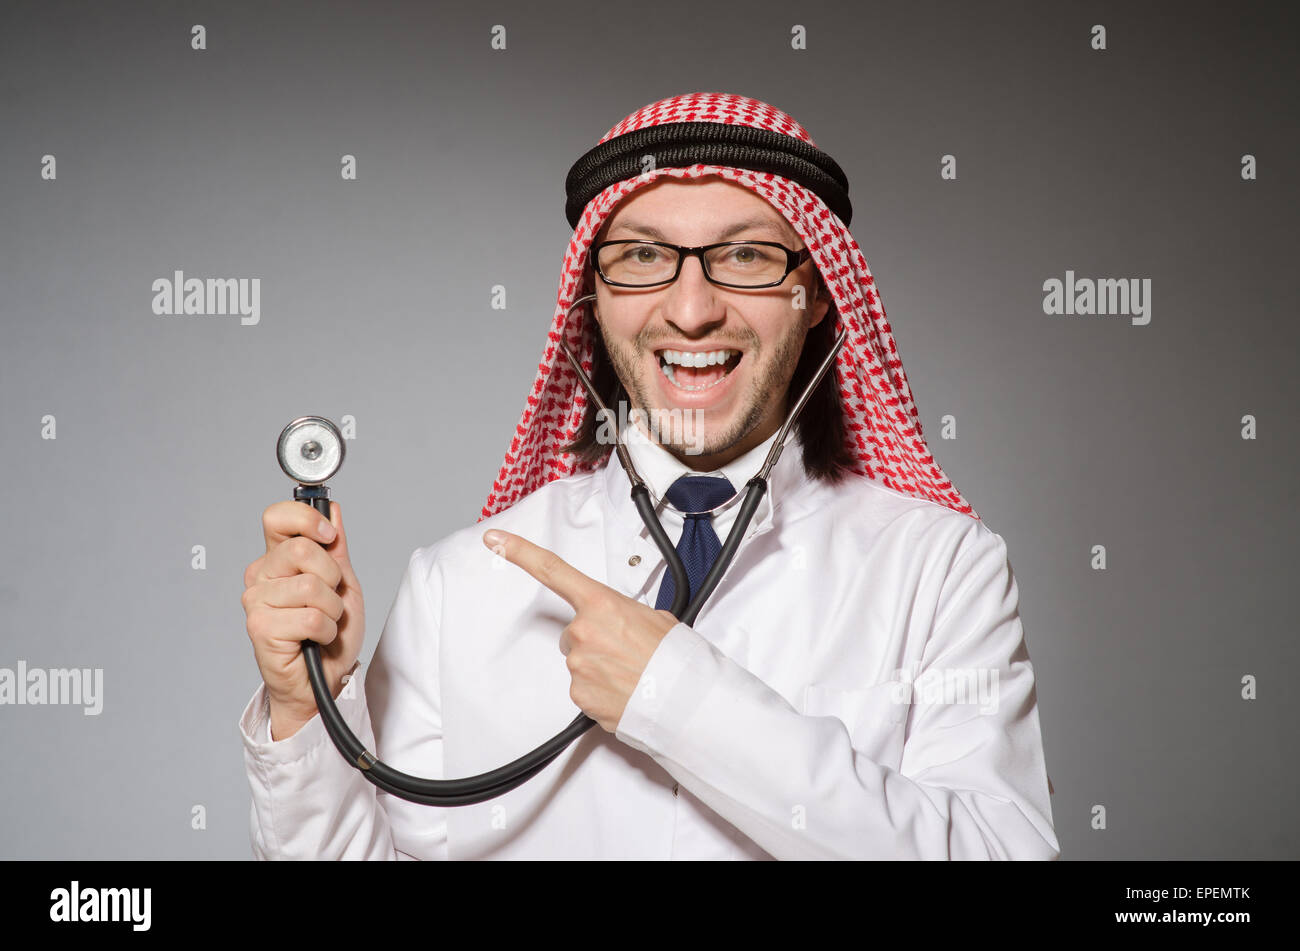 Arab nurse